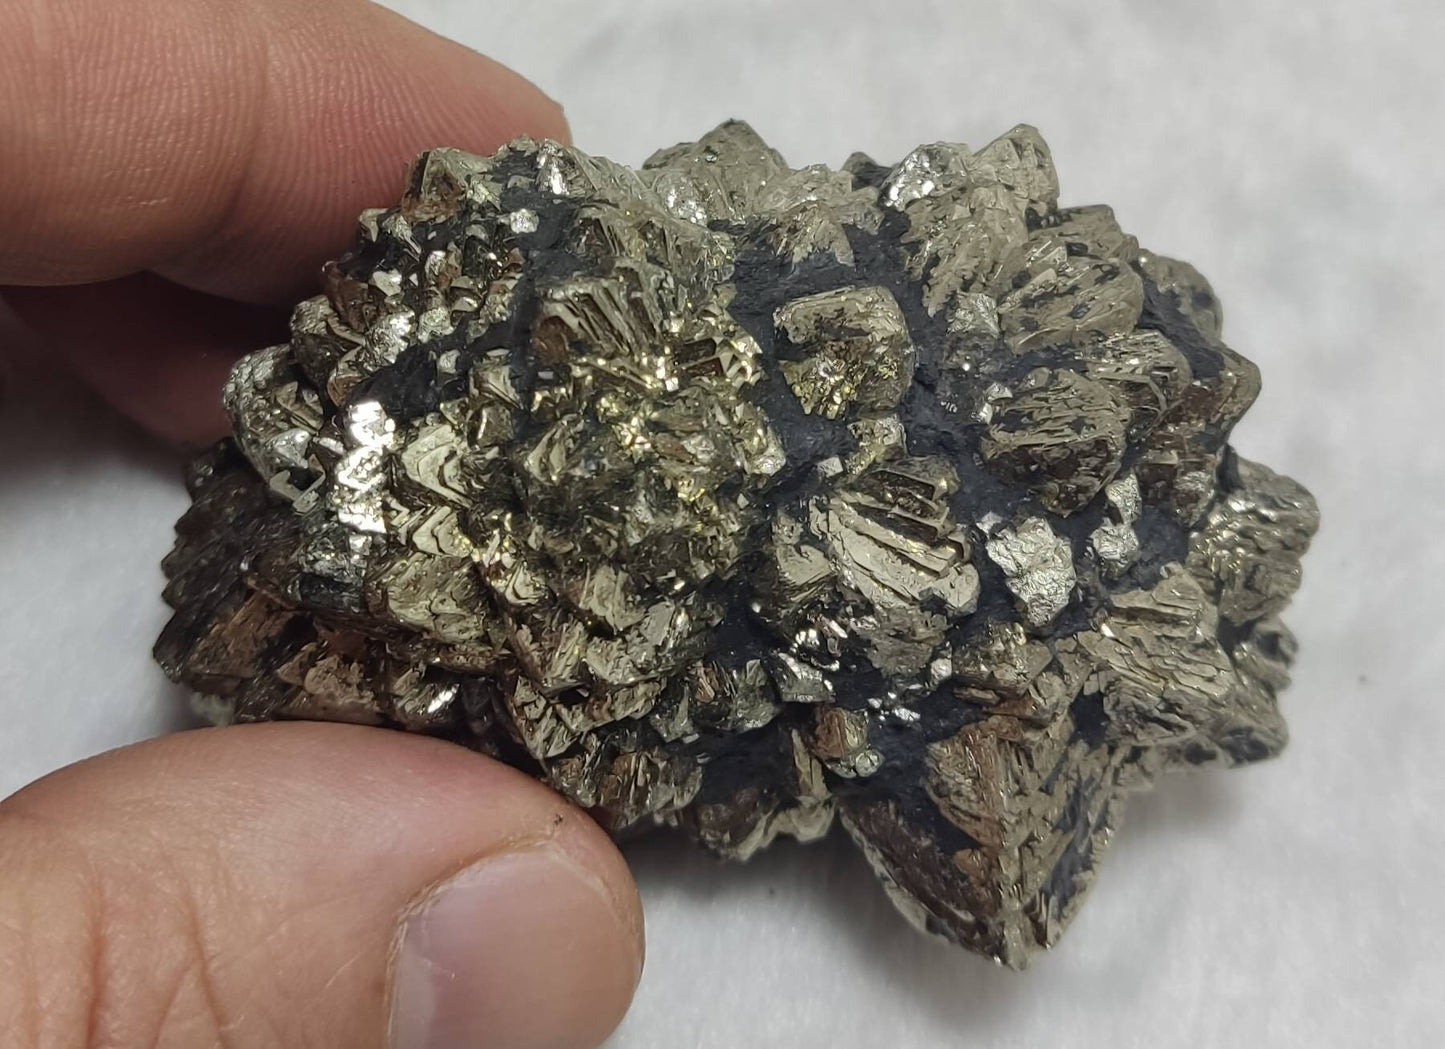 An amazing specimen of pyrite/marcasite 252 grams